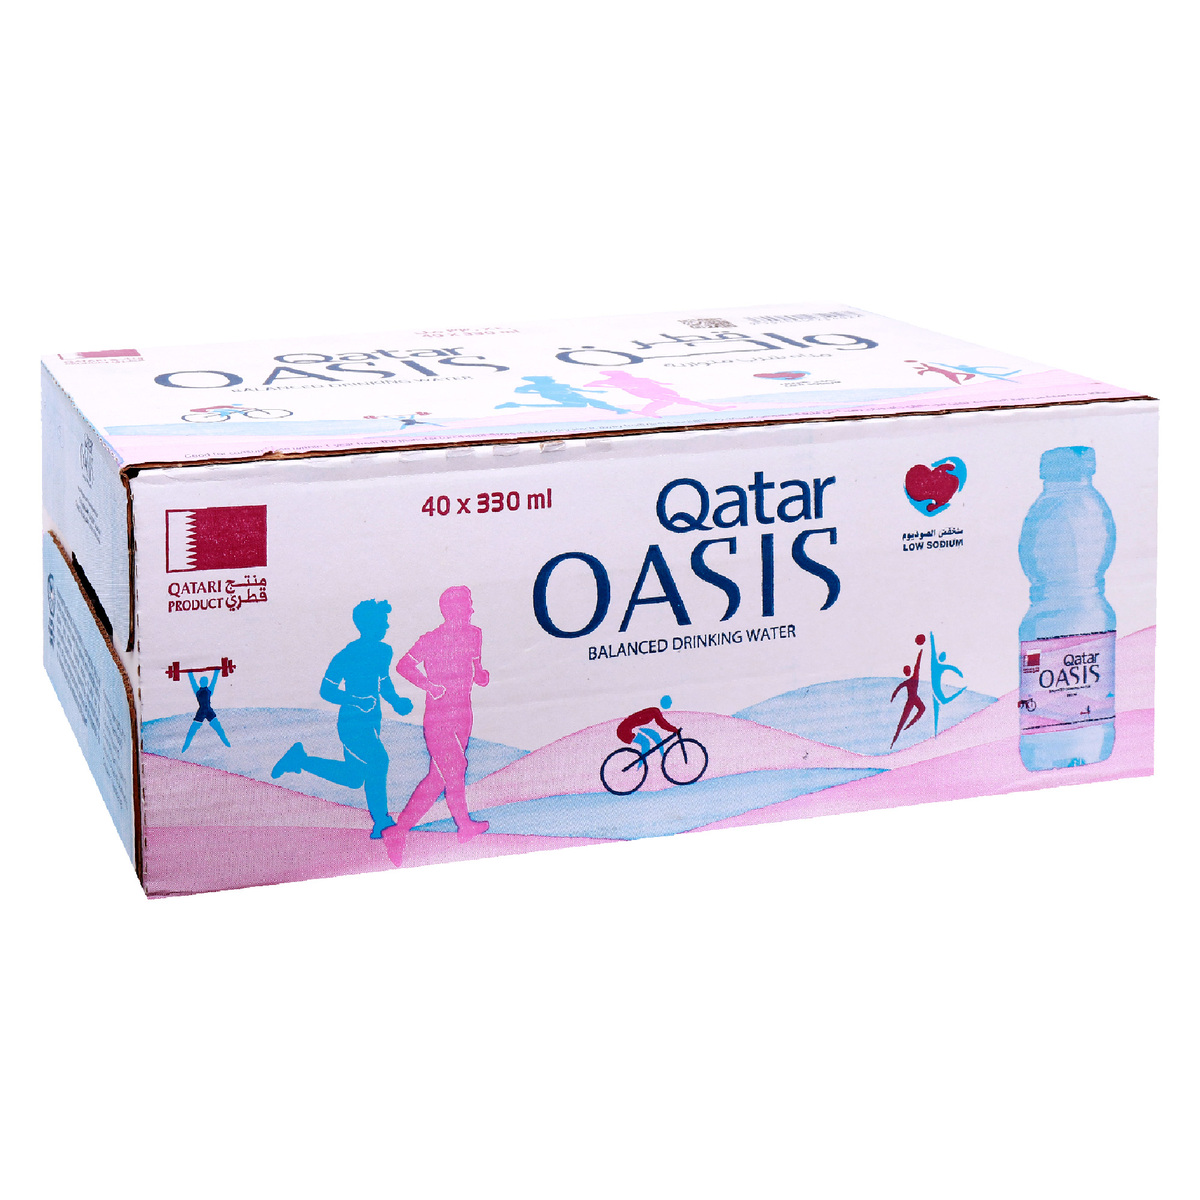 Qatar Oasis Balanced Drinking Water 24 x 330ml